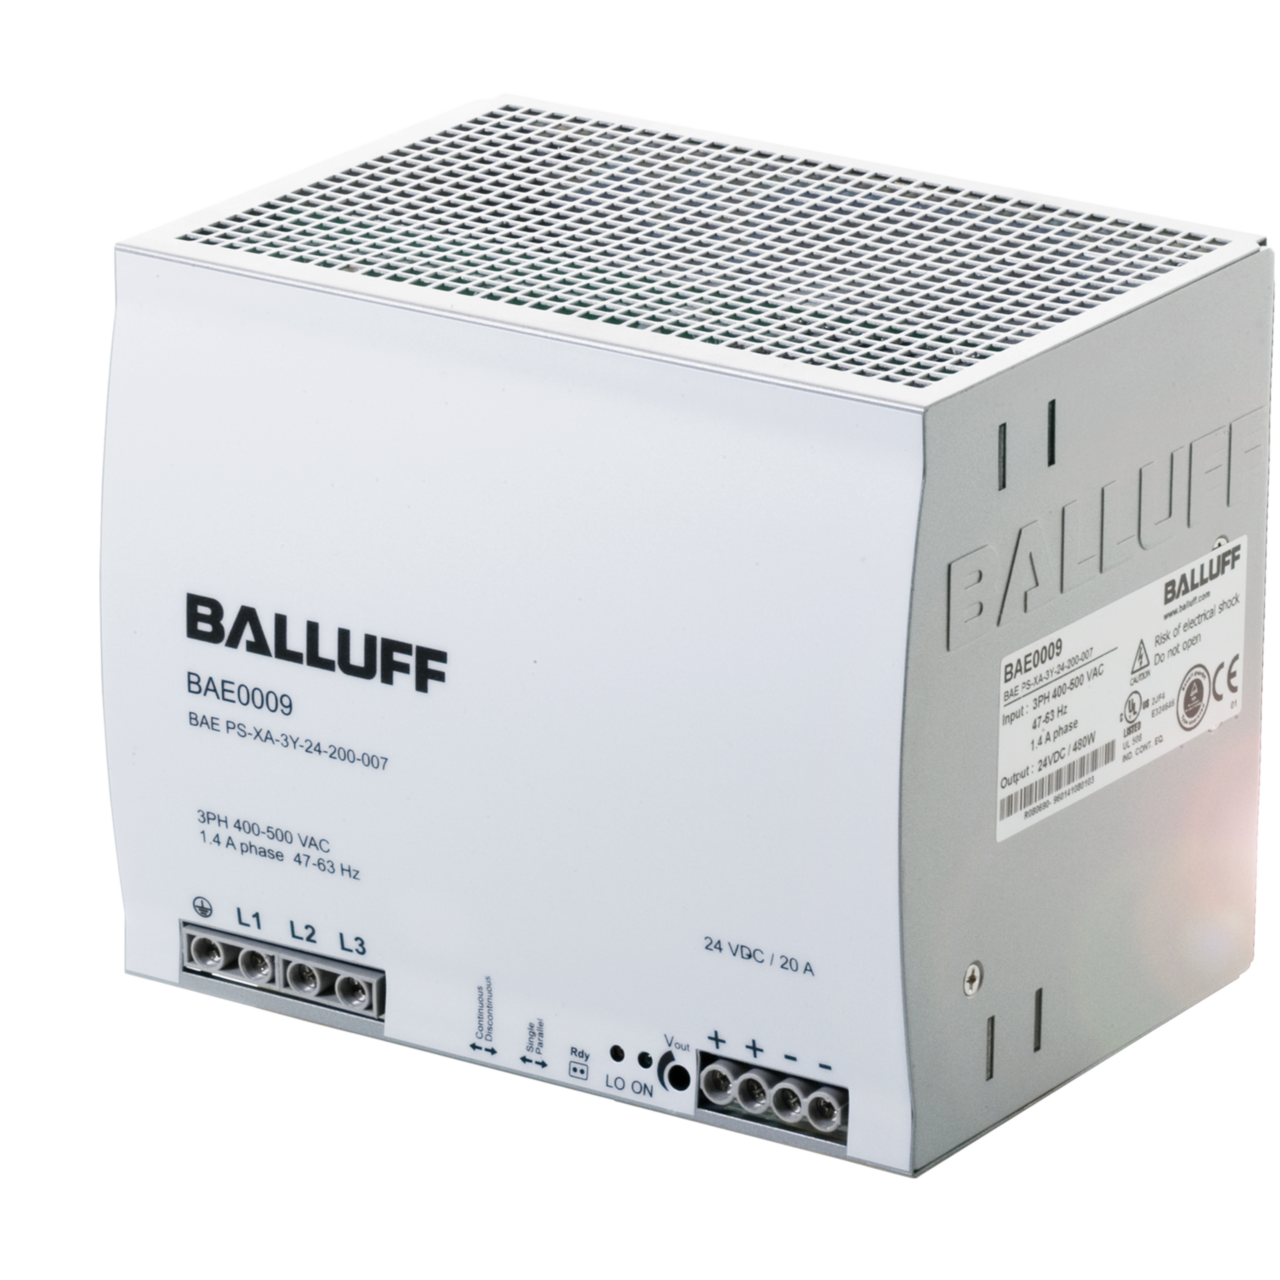 BALLUFF BAE0009 PS-XA-3Y-24-200-007 POWER SUPPLY 